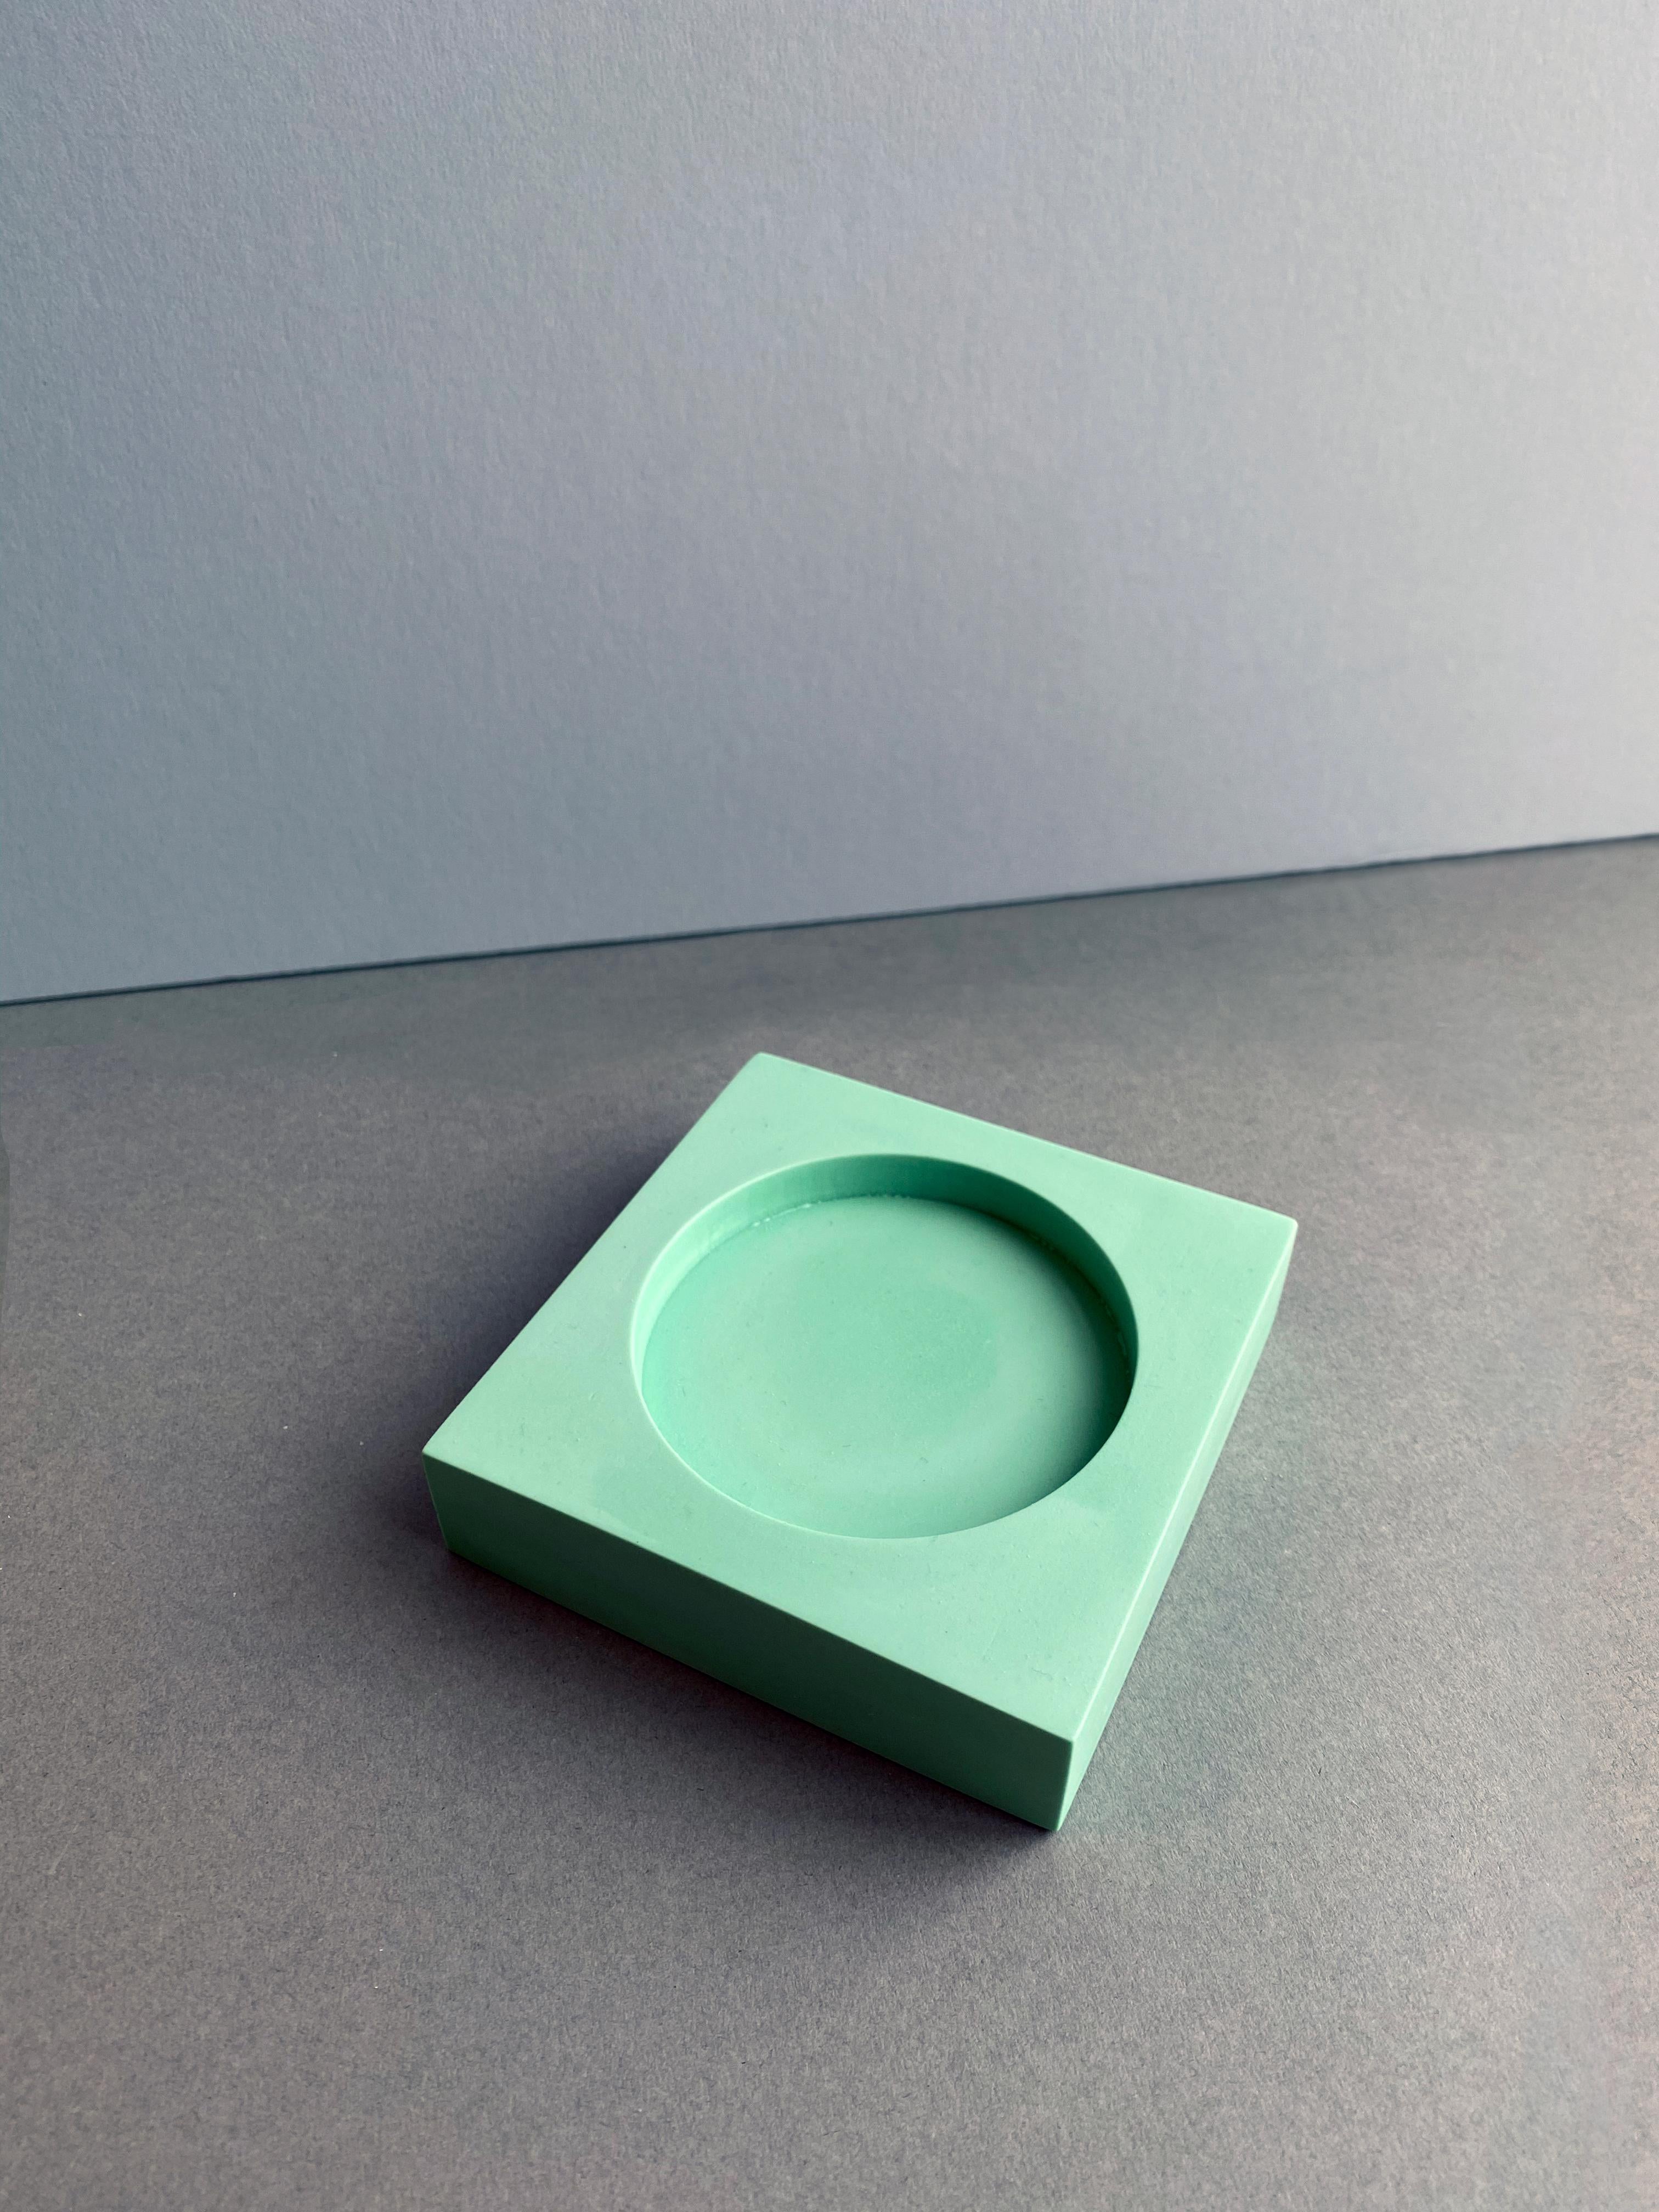 English Green Bowl Mould Project by Theodora Alfredsdottir